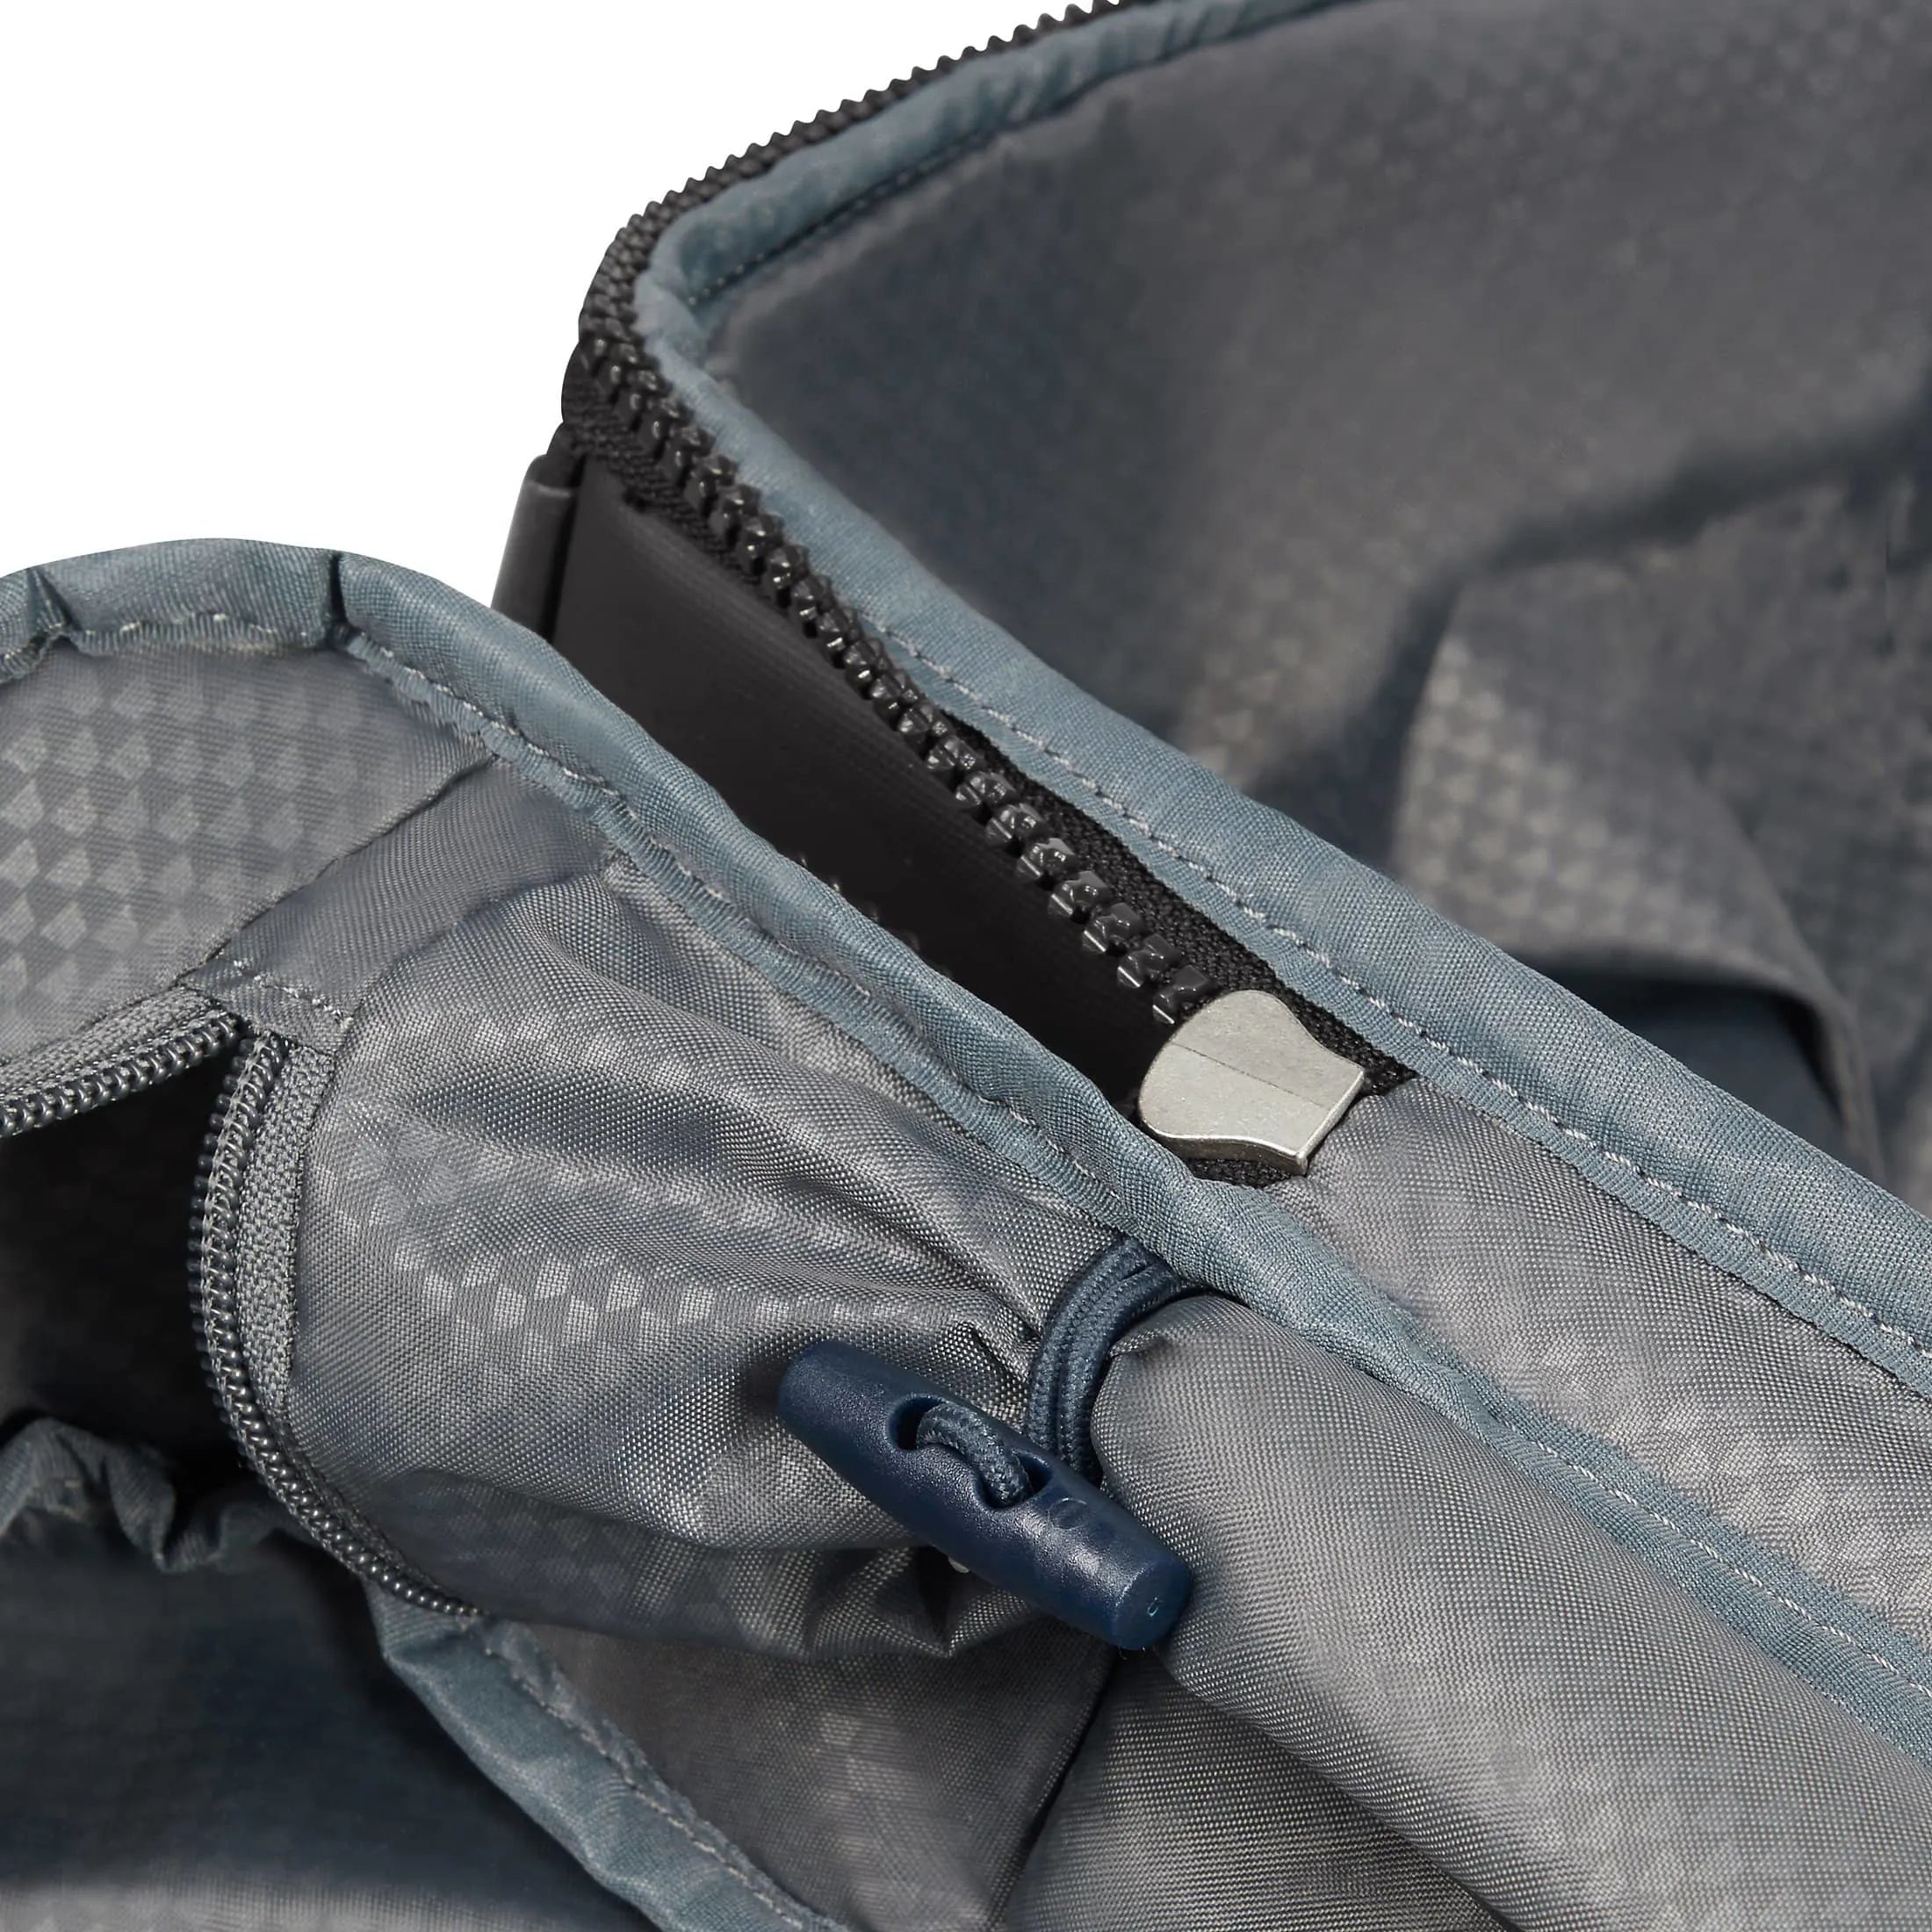 Samsonite Midtown Duffle travel bag with wheels 79 cm - Dark Blue